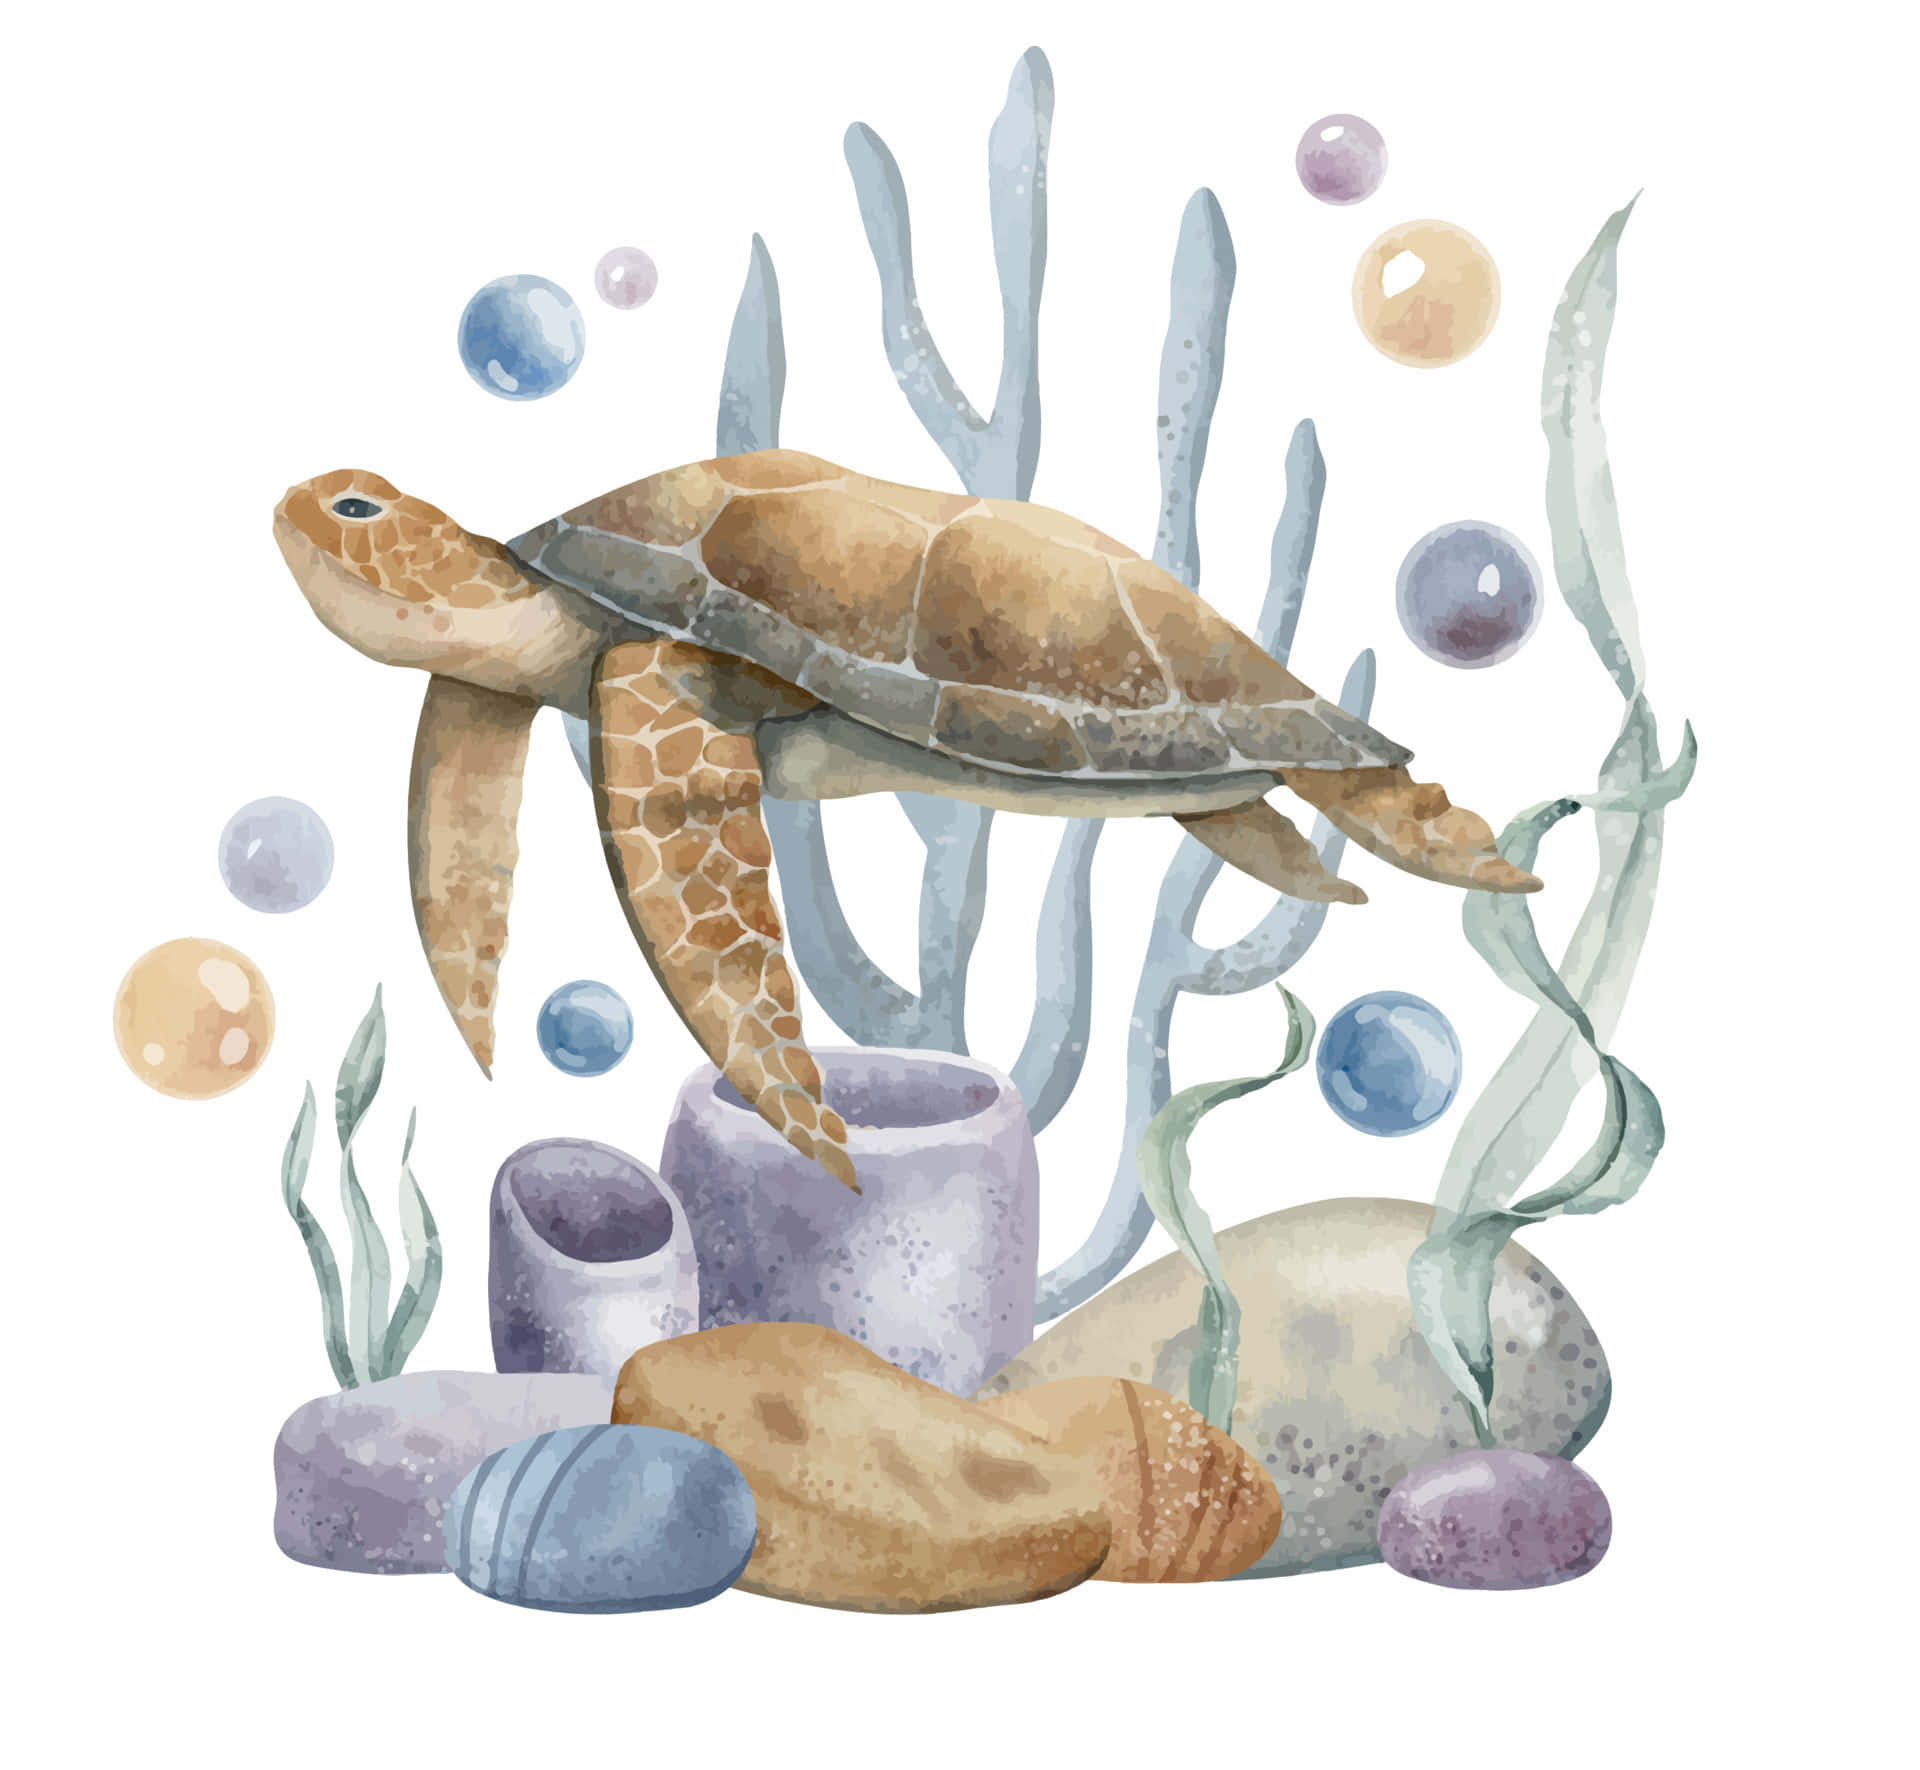 Majestic Sea Turtle Swimming Underwater